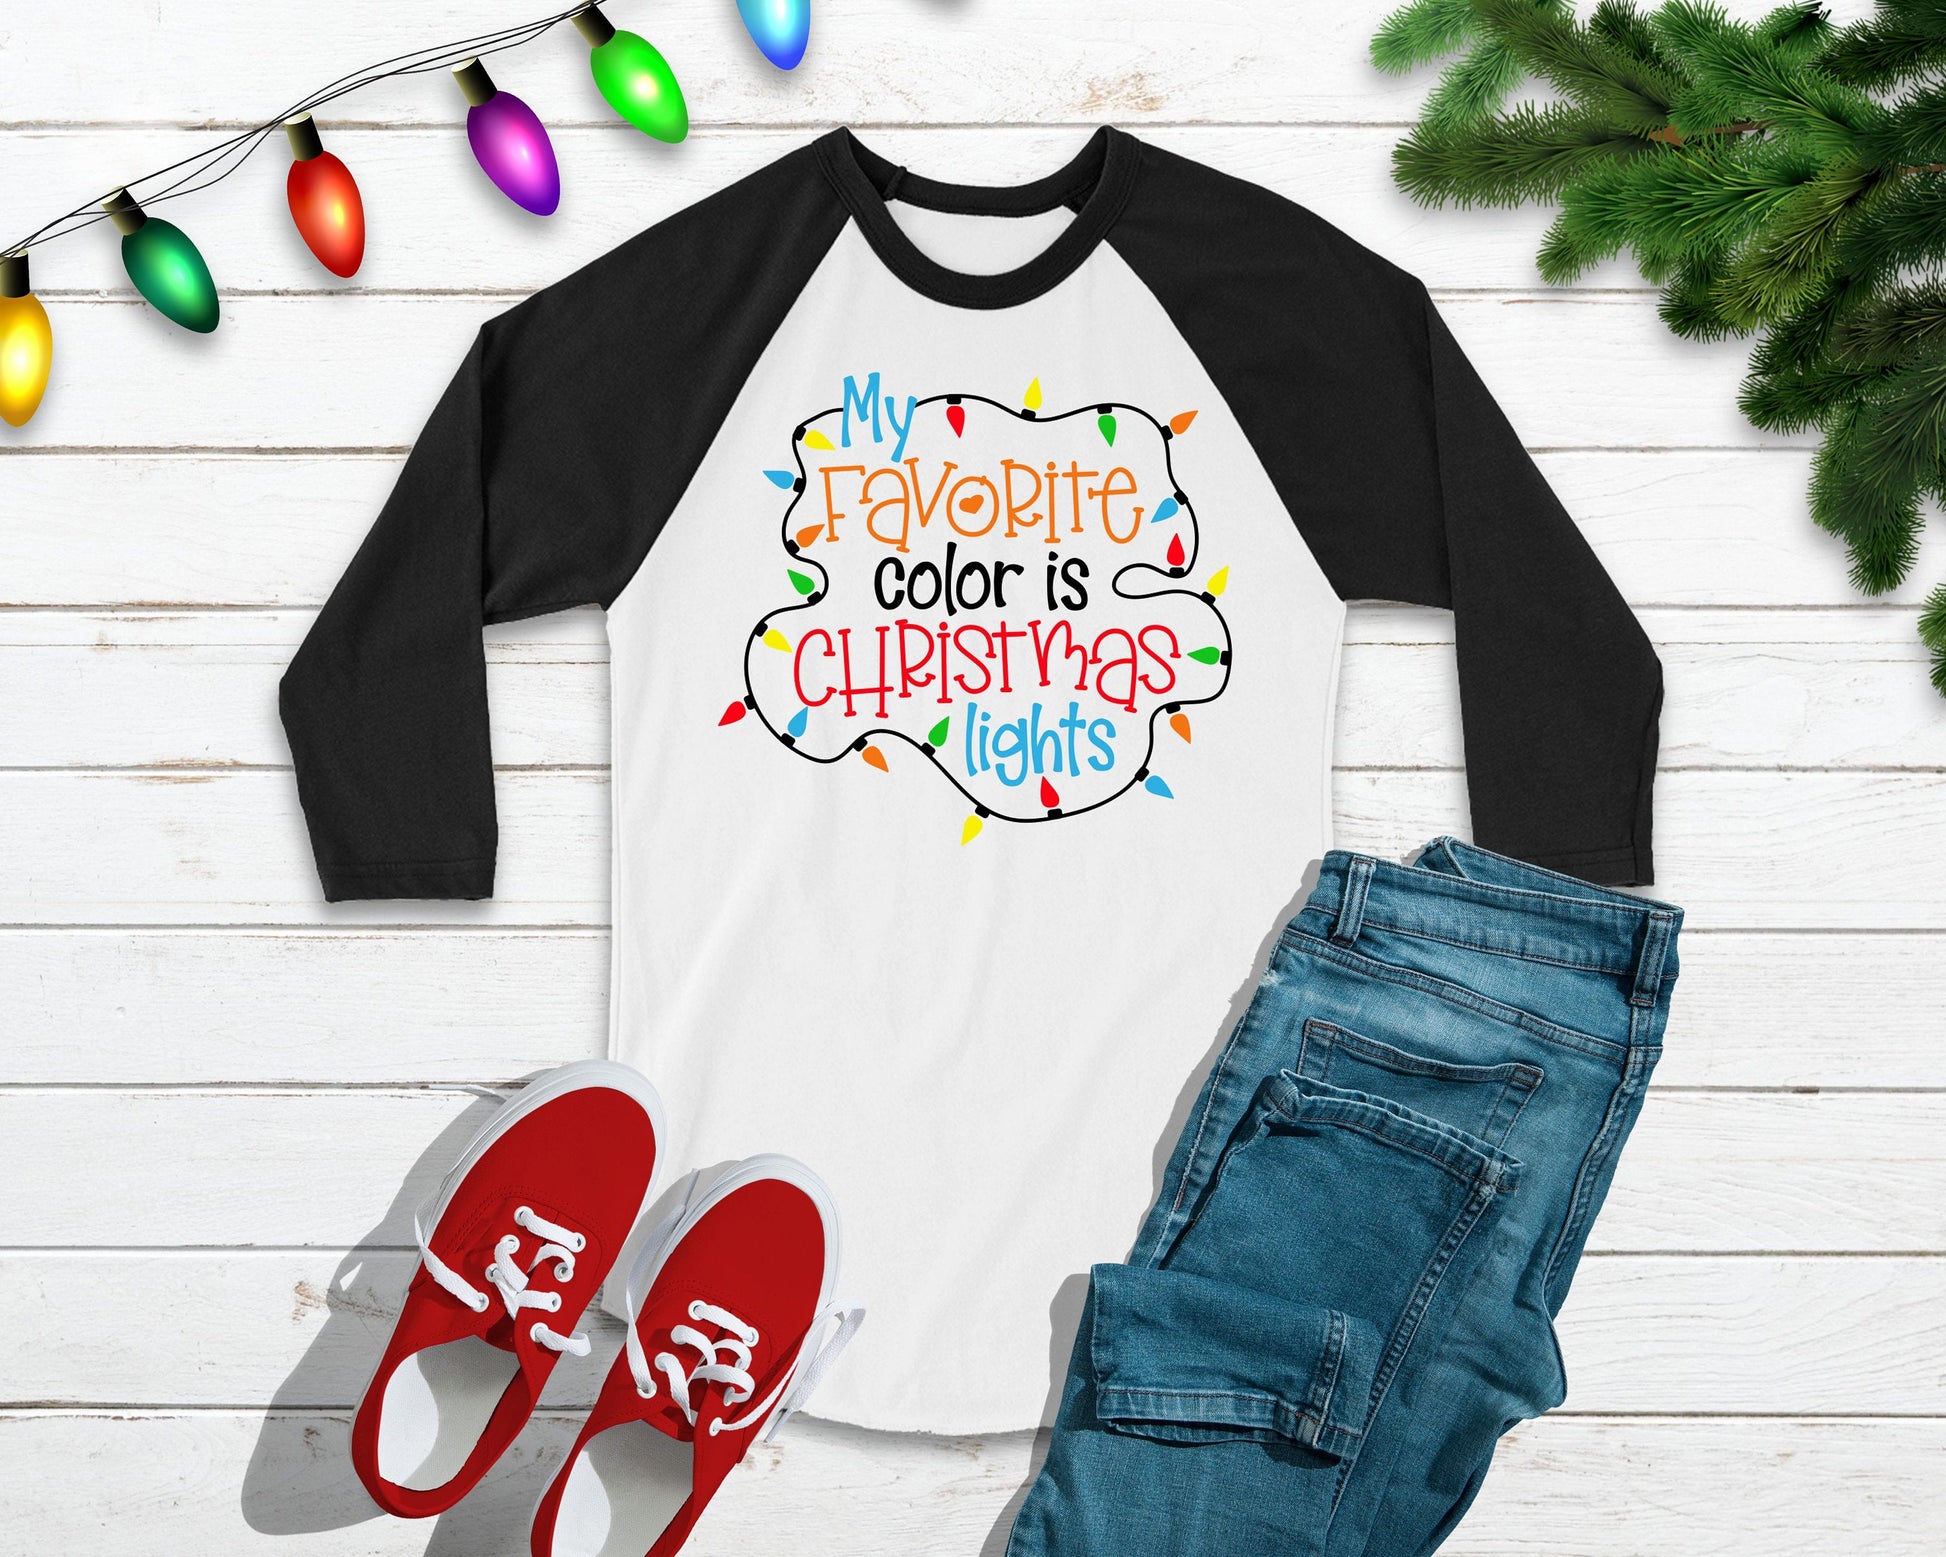 My Favorite Color is Christmas Lights unisex raglan t-shirt - women's christmas tee 